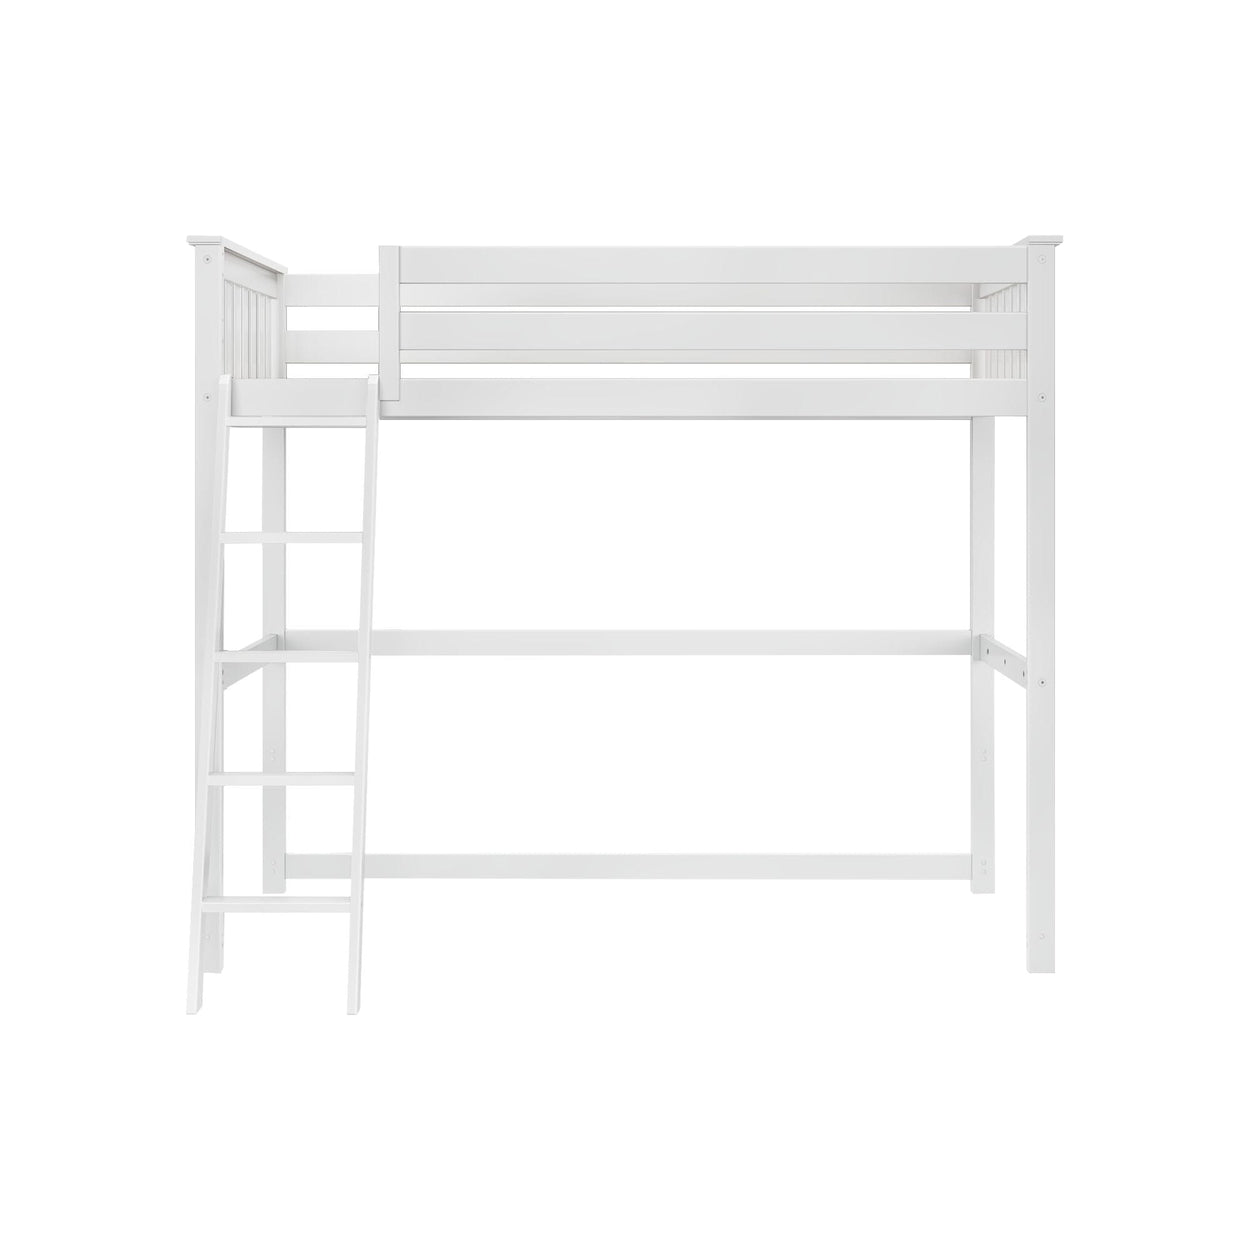 180227-002 : Loft Beds Twin-Size High Loft Bed, White